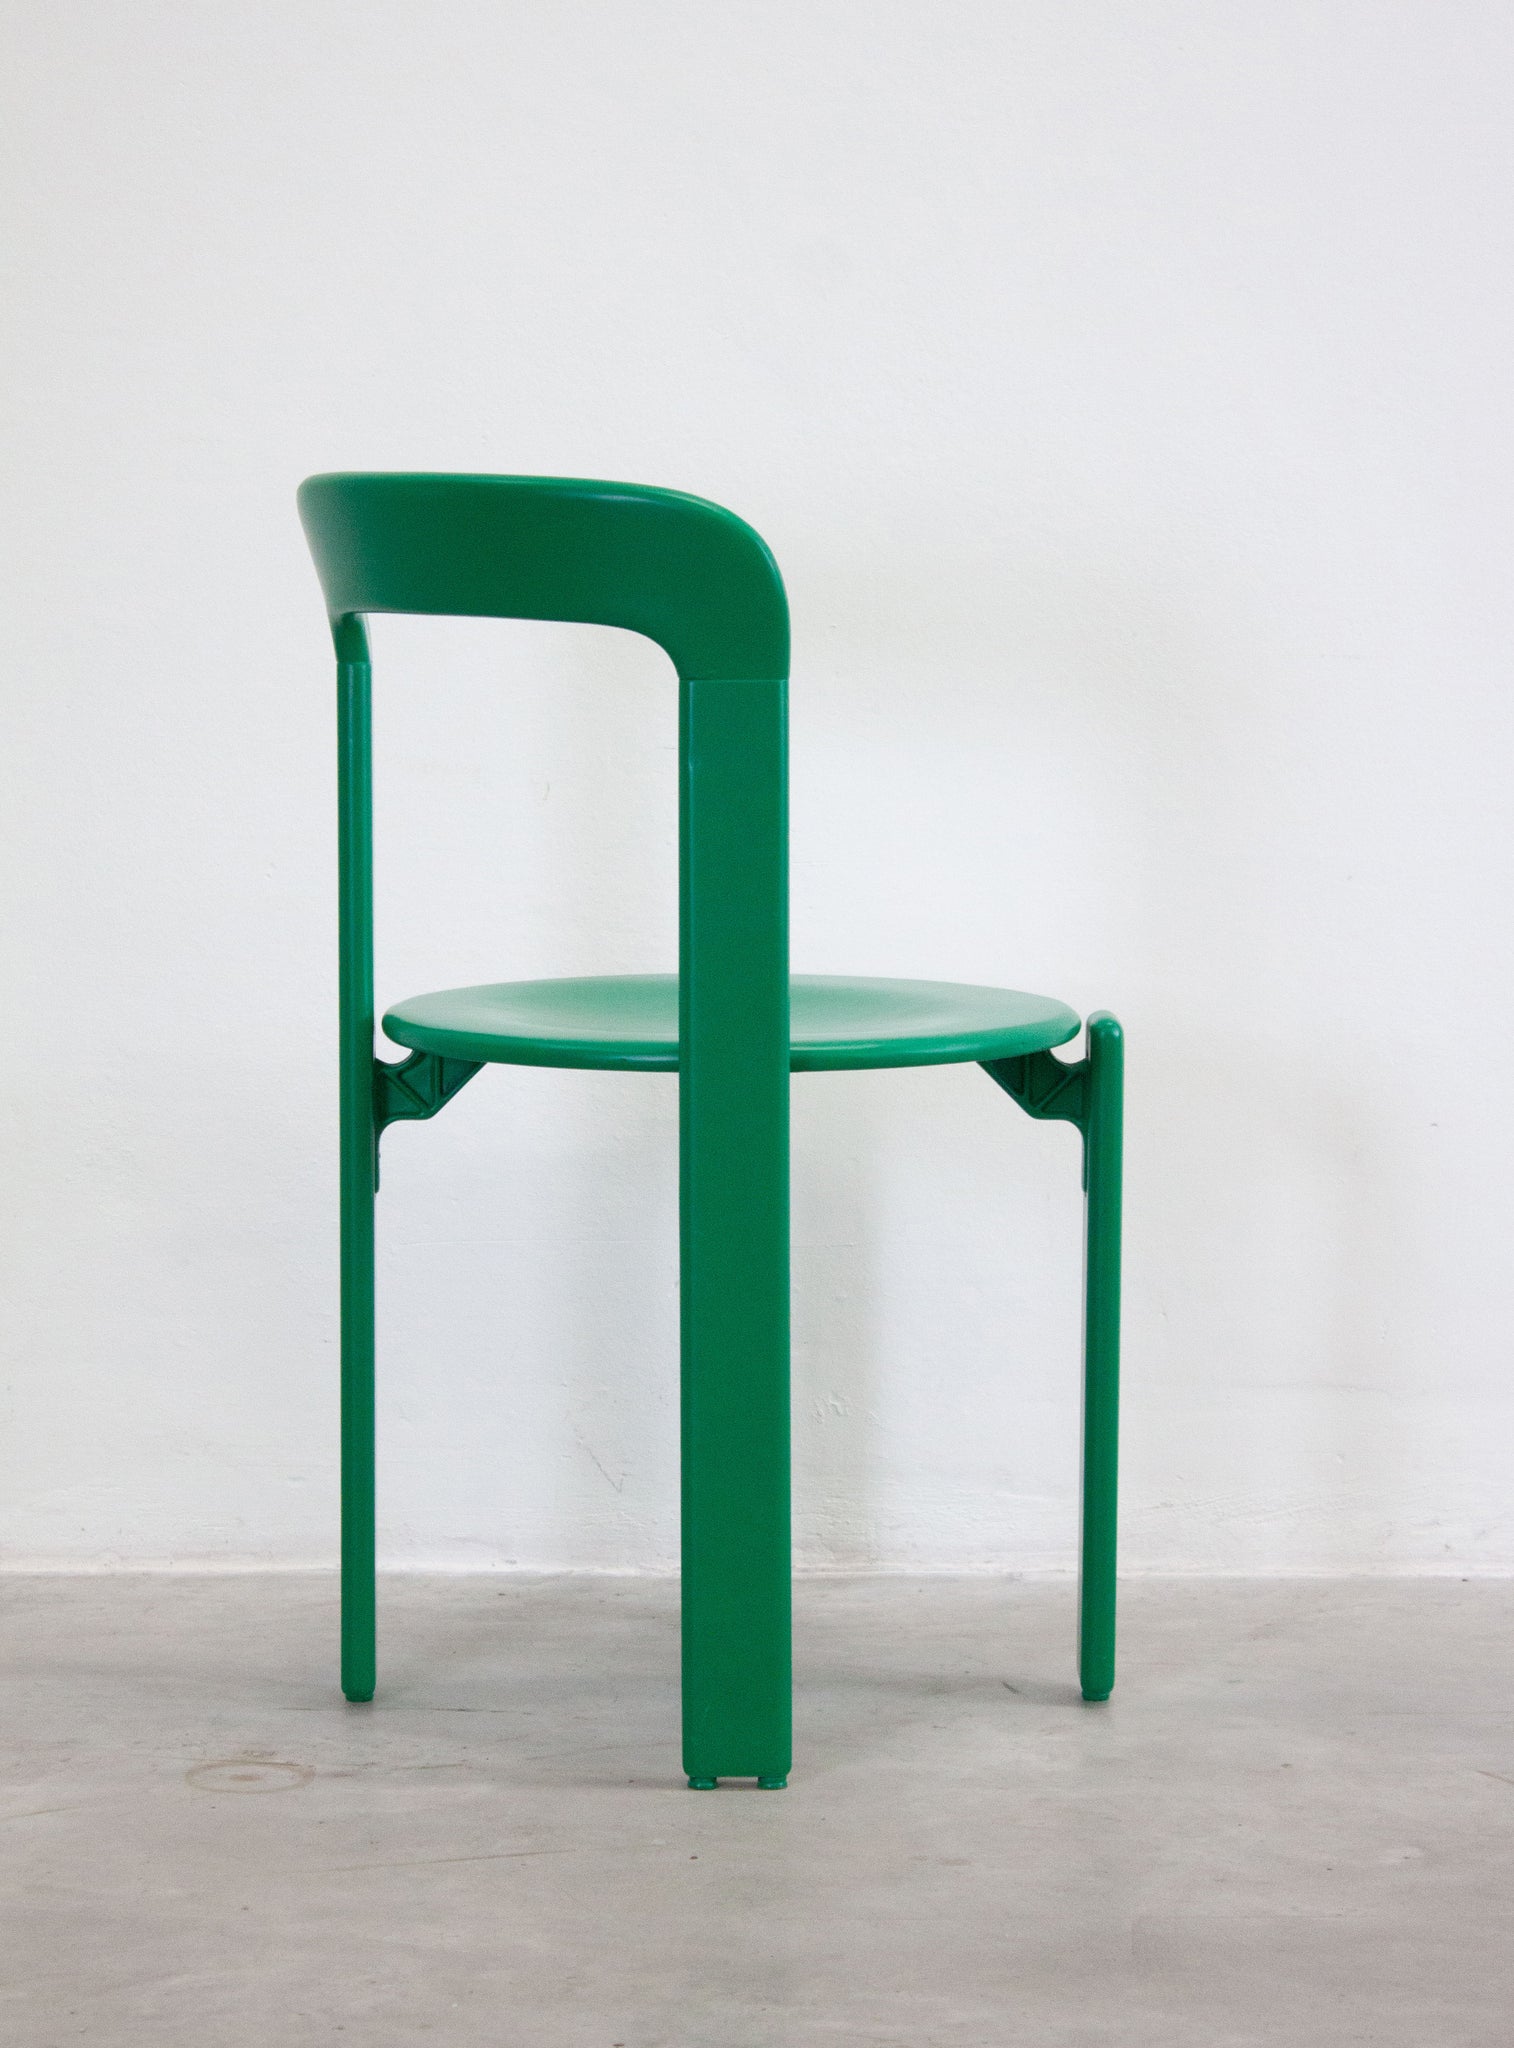 Dietiker Rey Dining Chairs by Bruno Rey (Green)